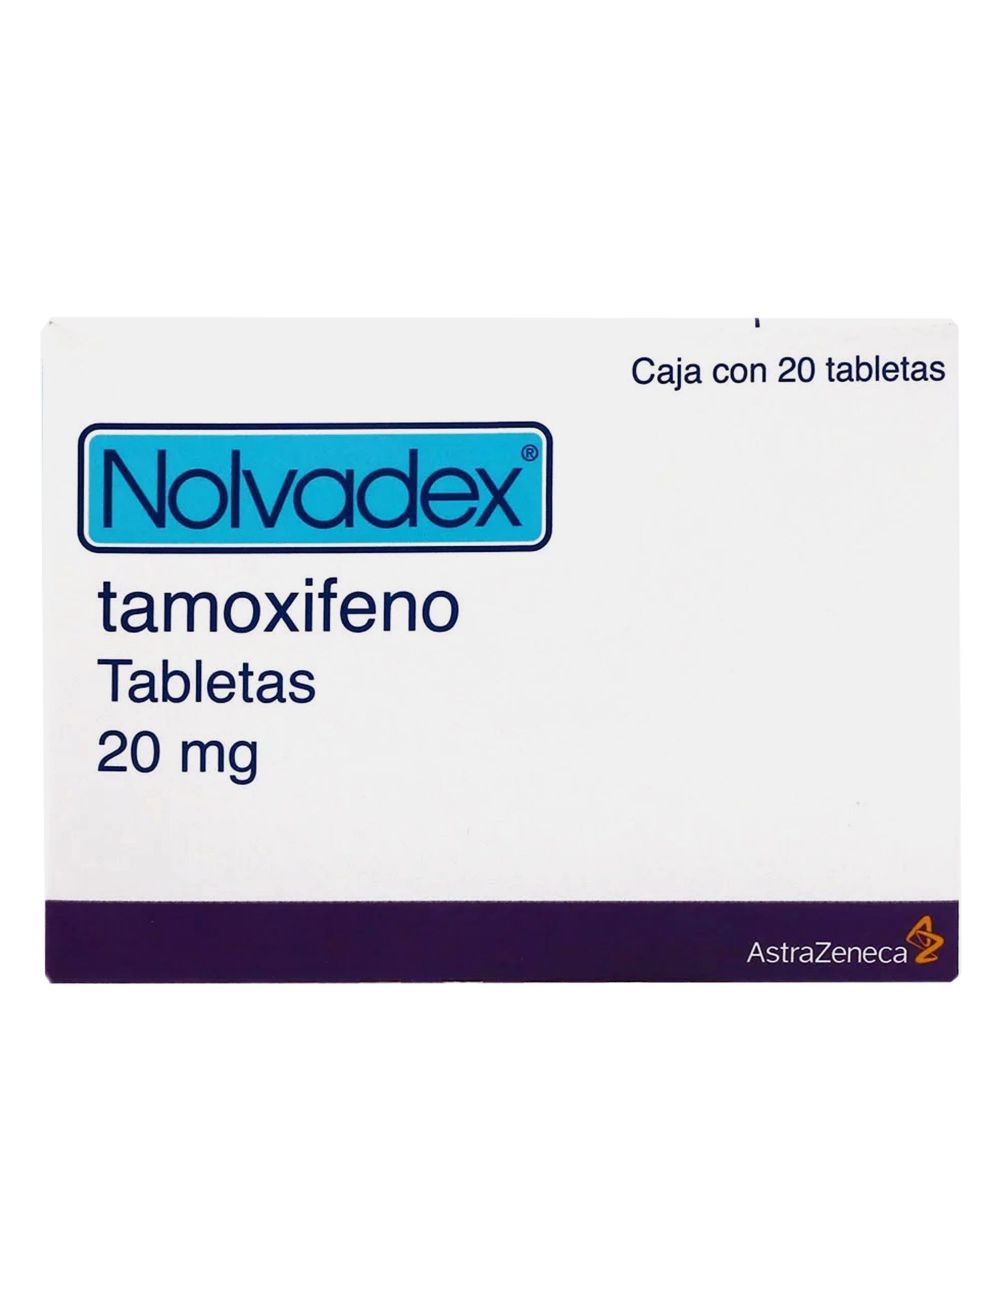 Nolvadex Tamoxifeno - 20 Tabs de 20 mg c/u. AstraZeneca